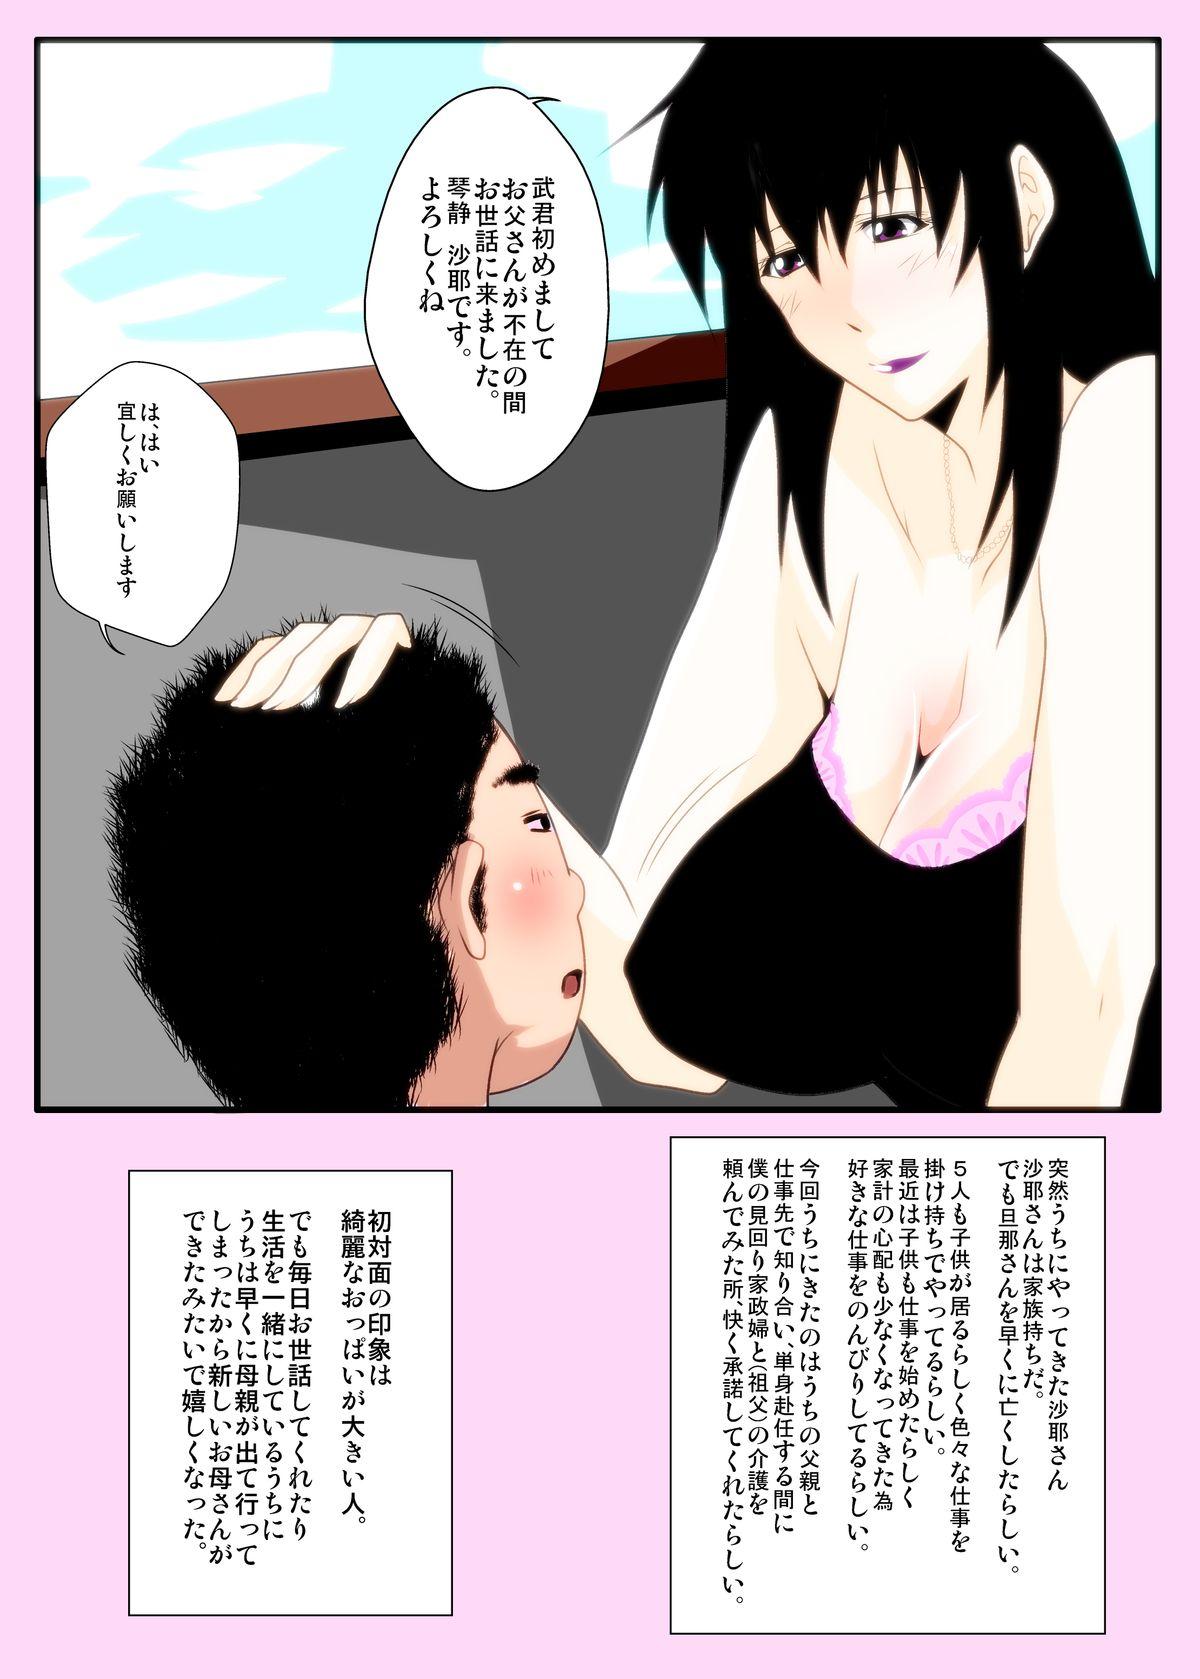 Speculum Kinsei-ke no Hitobito Daiichiwa Office Sex - Page 4